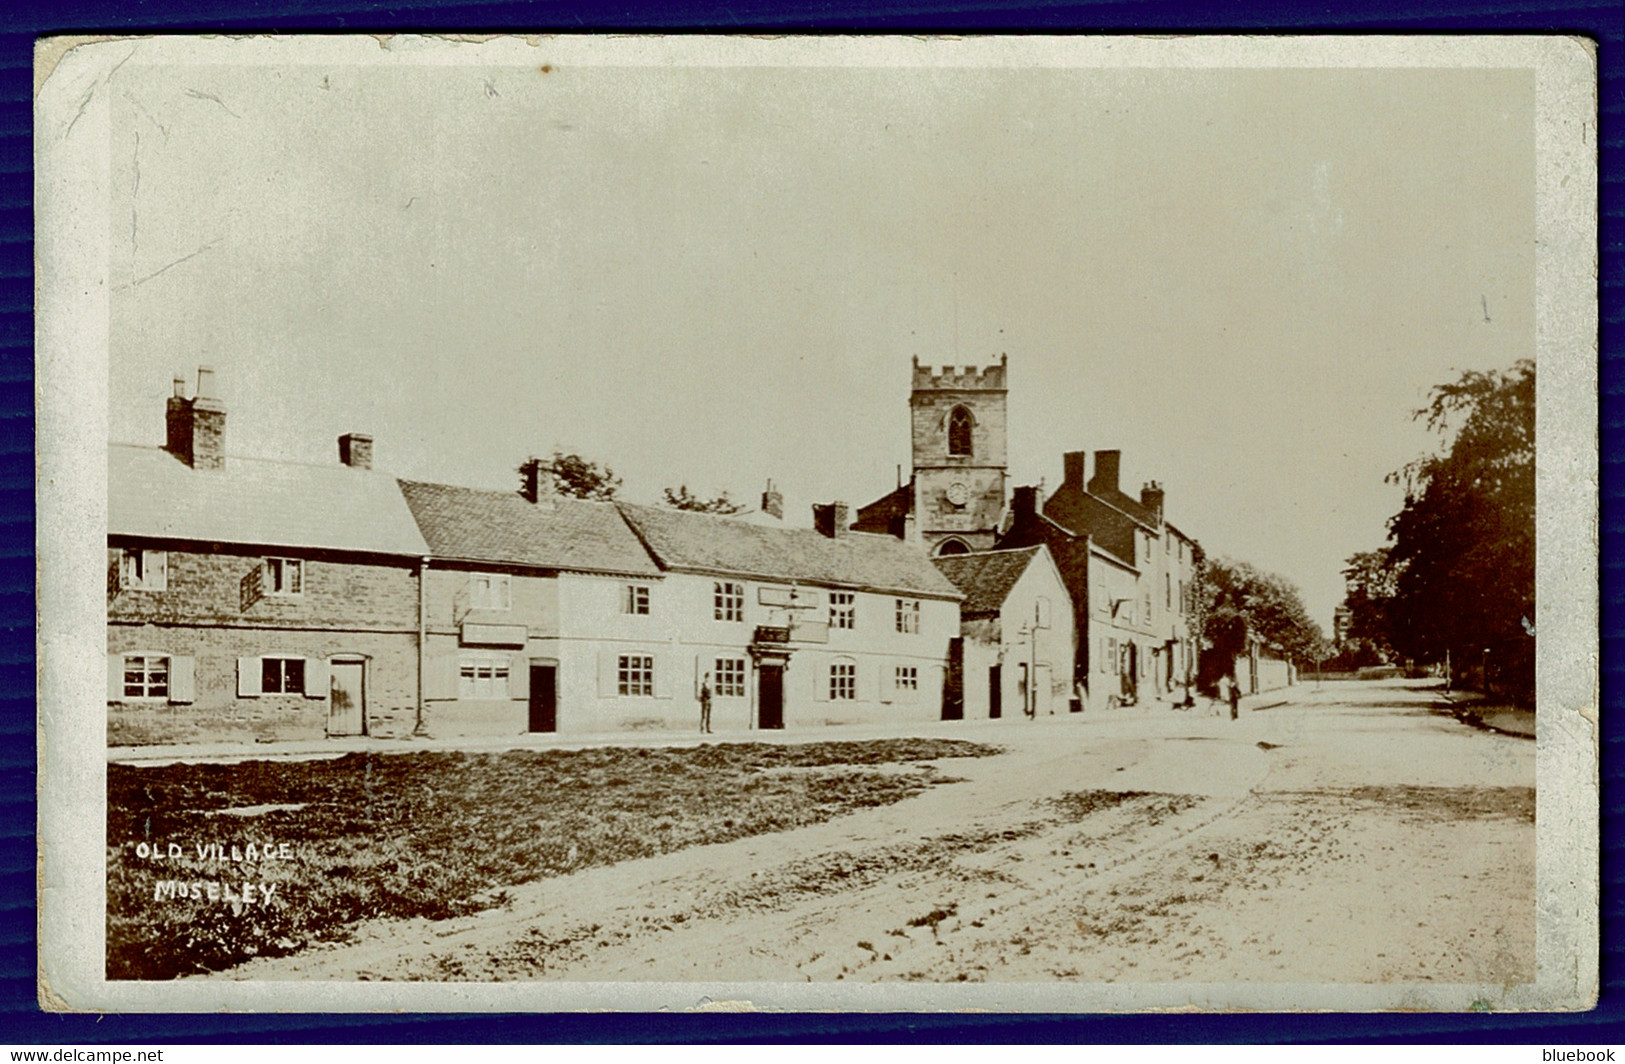 Ref 1552 - Early Real Photo Postcard - Mosleley Old Village - Birmingham Warwickshire - Birmingham